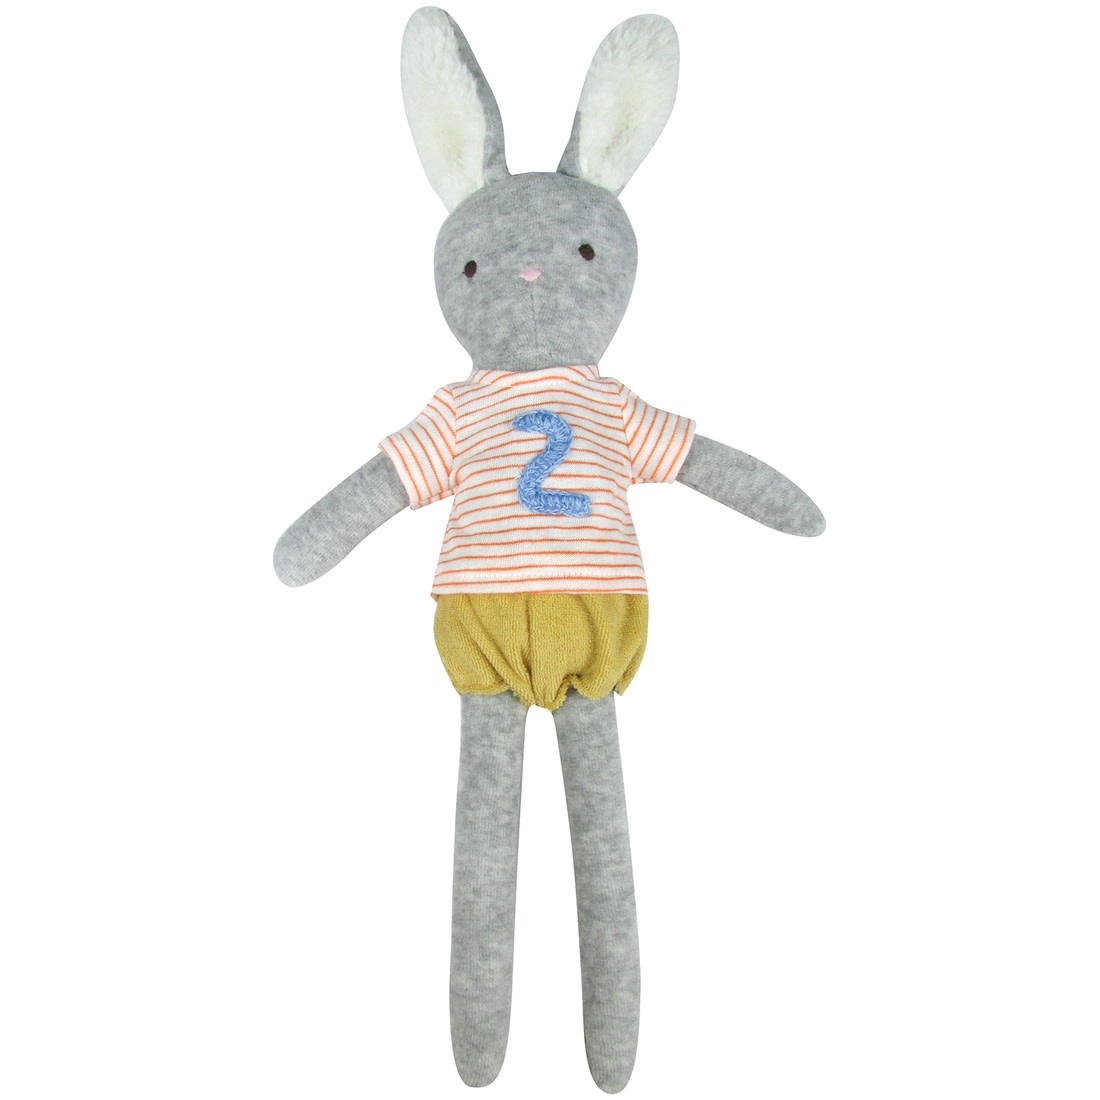 Albetta 2nd Year Birthday Bunny Toy